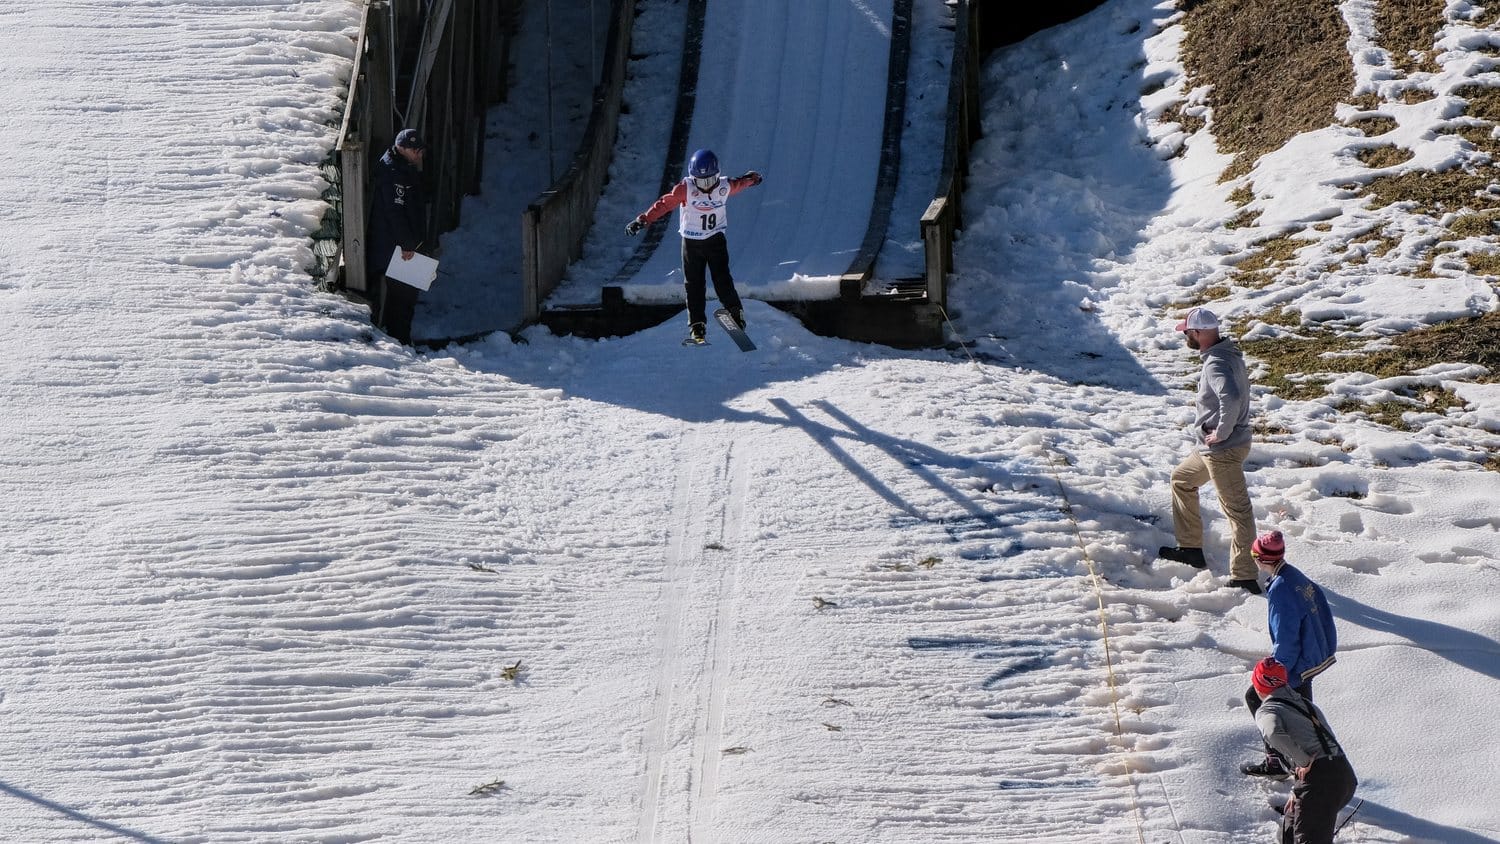 Jackson Wnek of Norge Ski Club at the 118th annual Norge Ski Club, winter tournament, 2023.